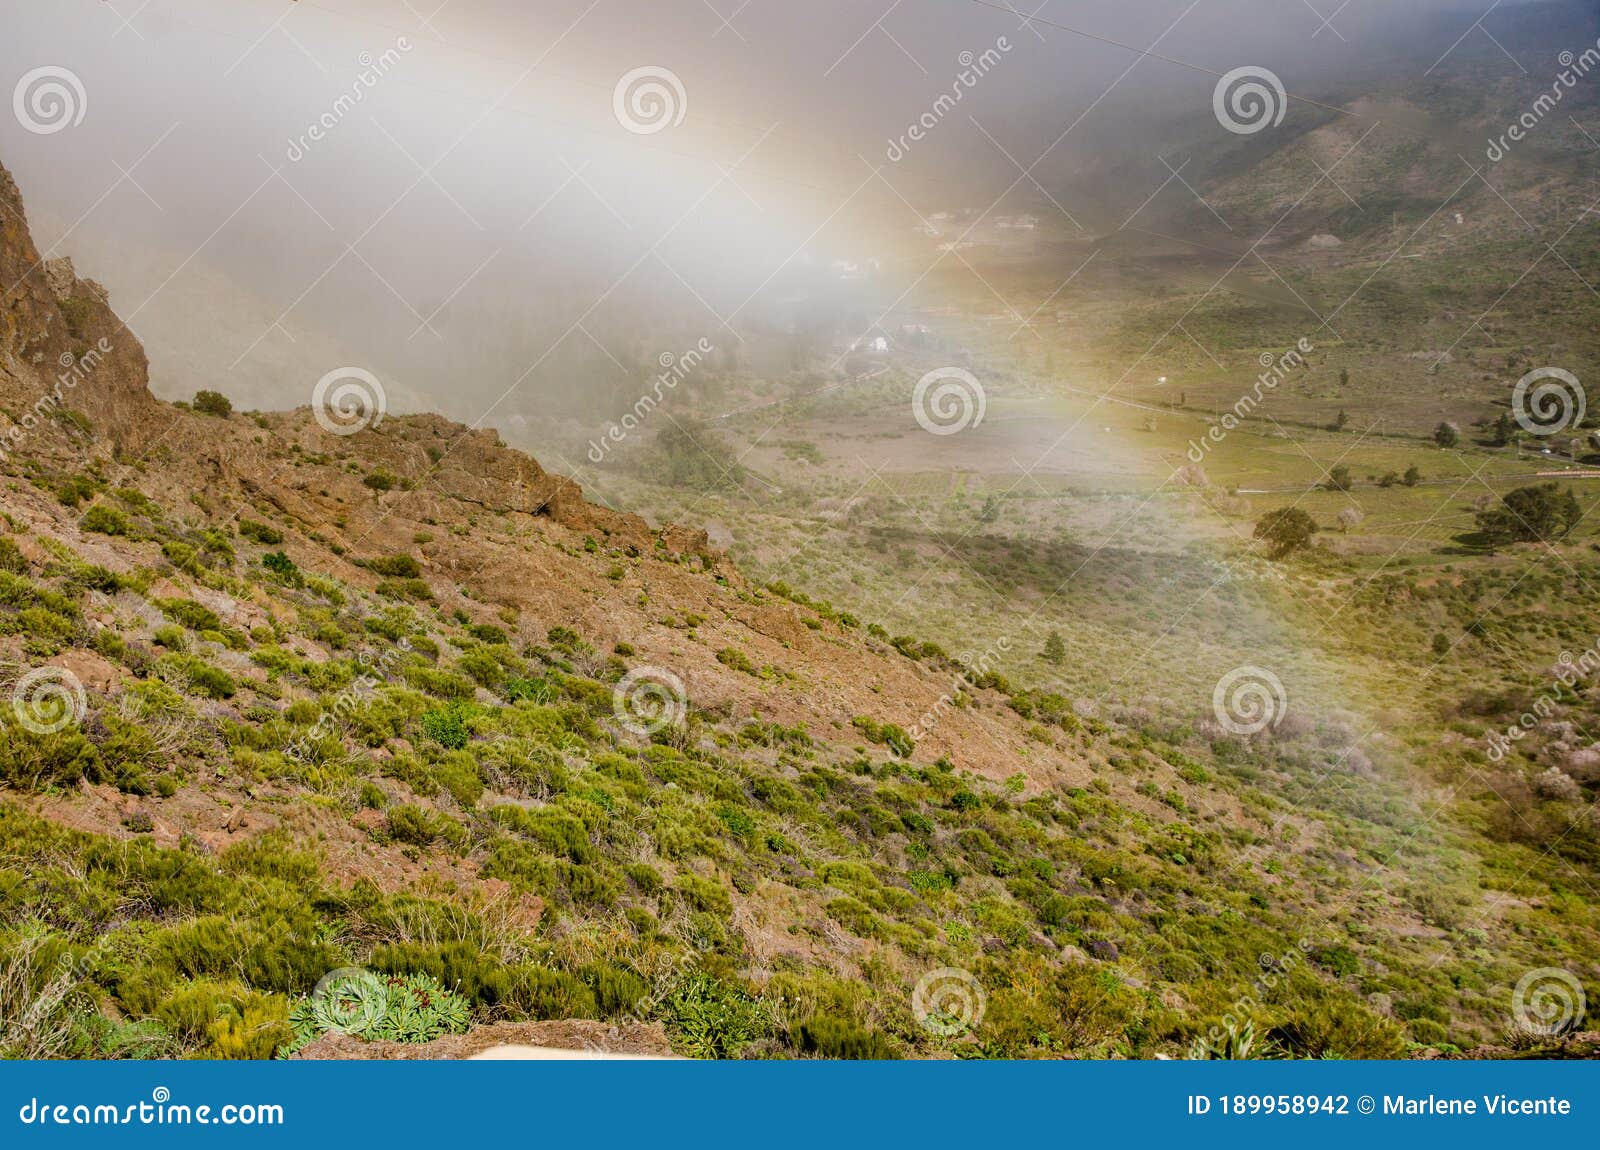 rainbow in masca in the municipality of buenavista del norte de tenerife in the canary islands. spain